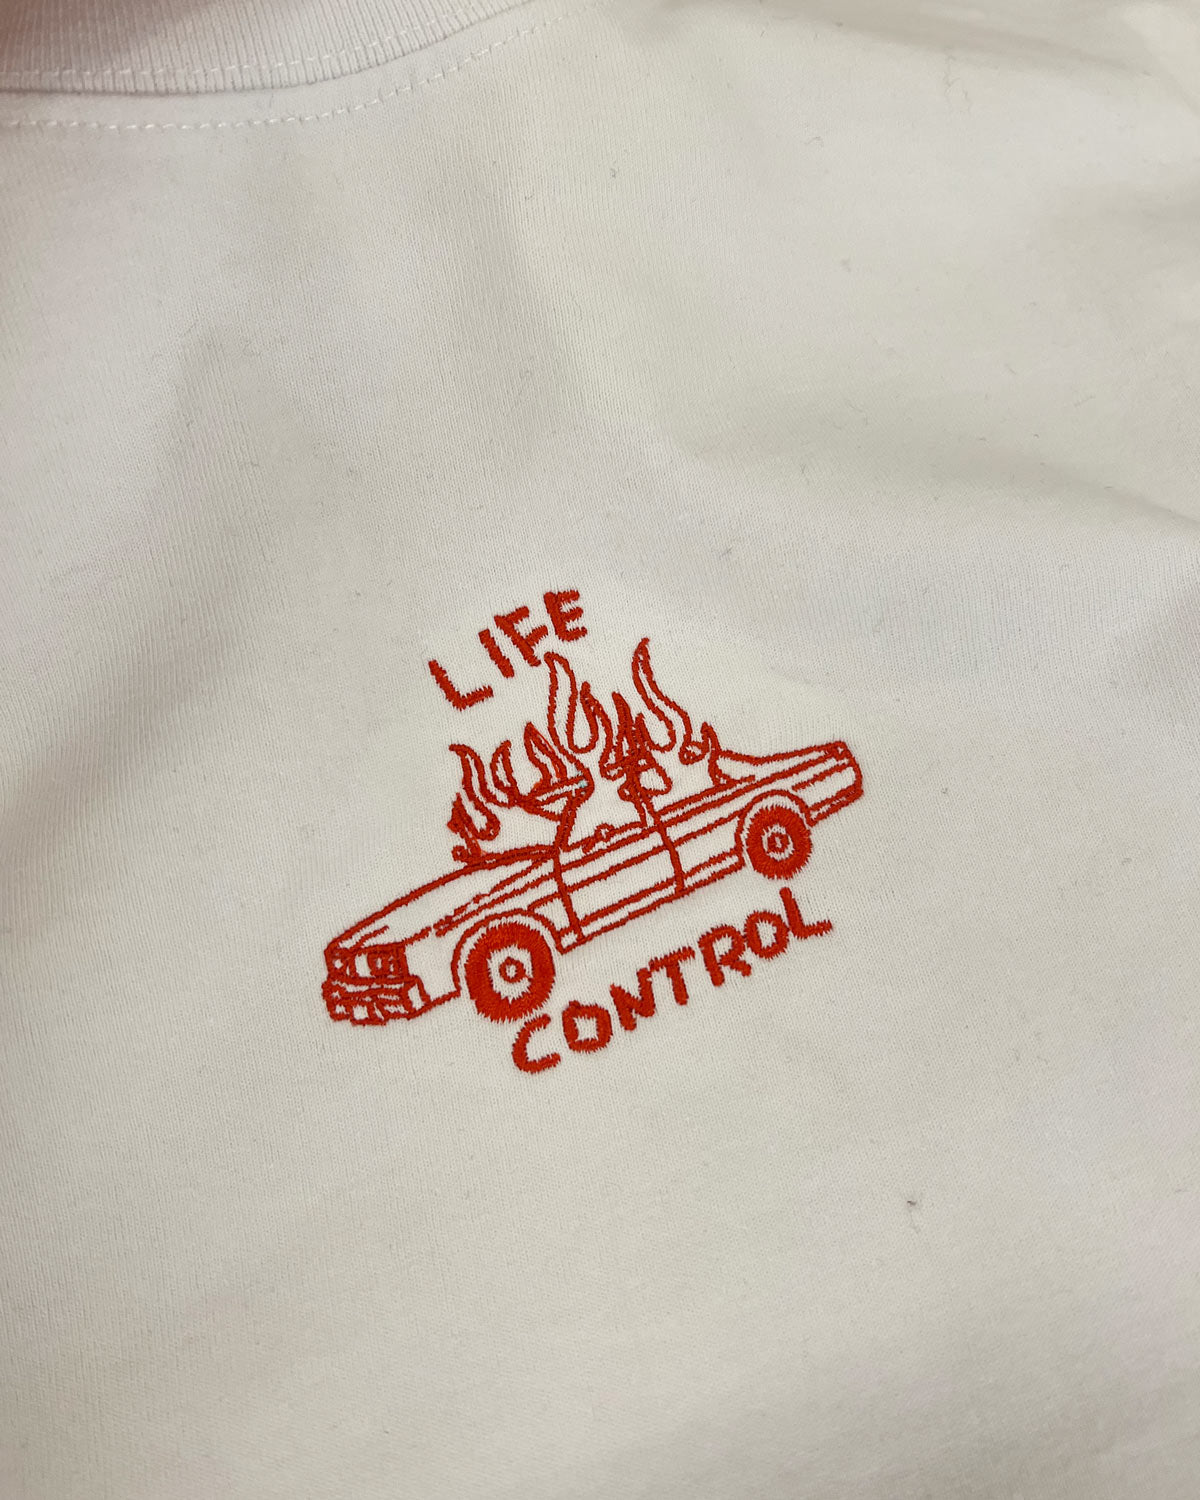 LIFE CONTROL Shirt by KUGU Studio